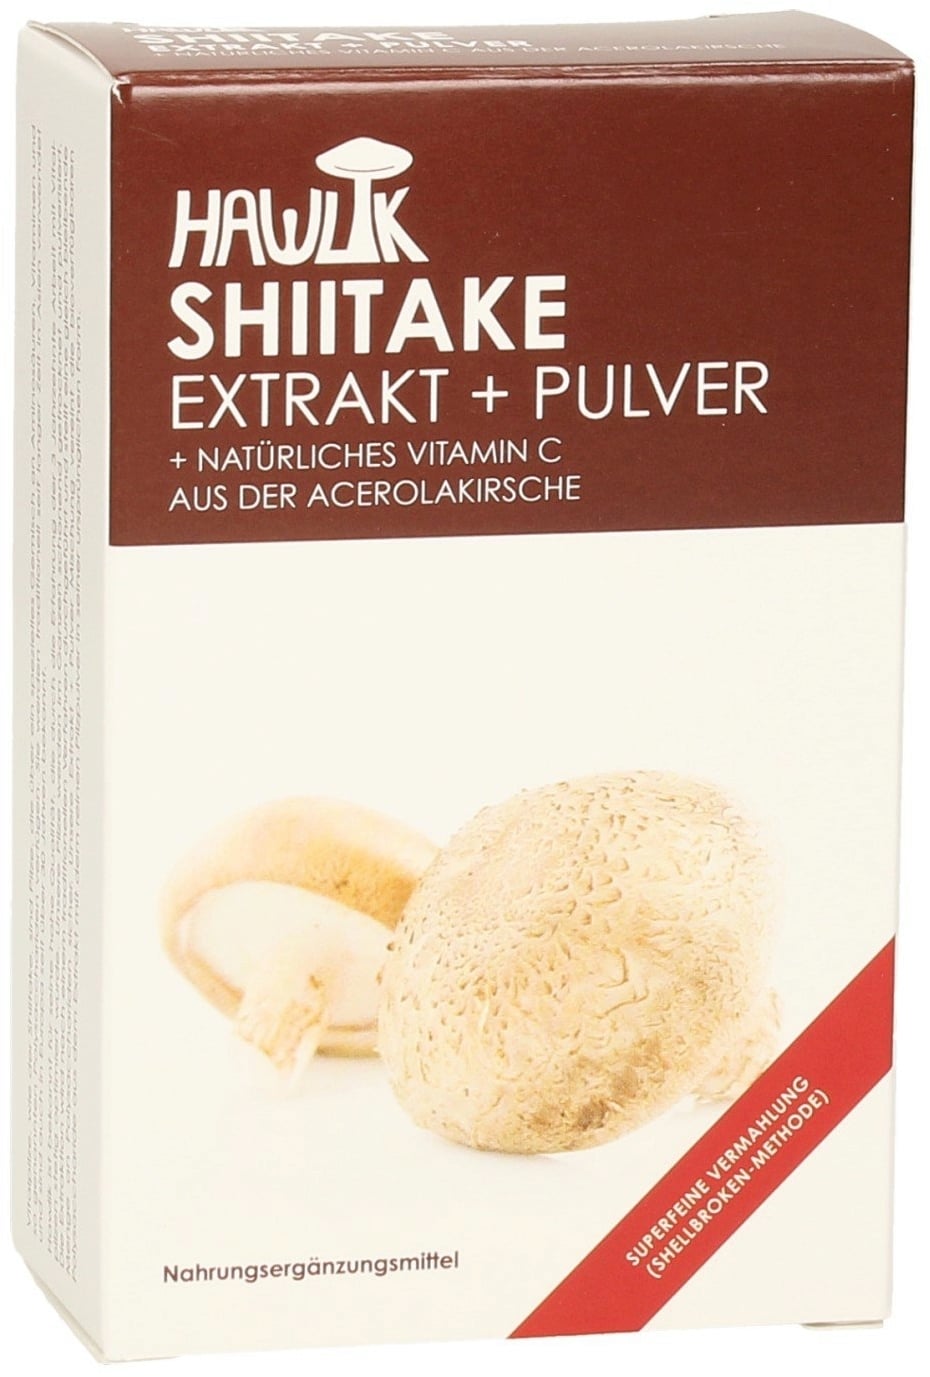 Hawlik Shiitake Extrakt + Pulver Kapseln - 60 Kapseln